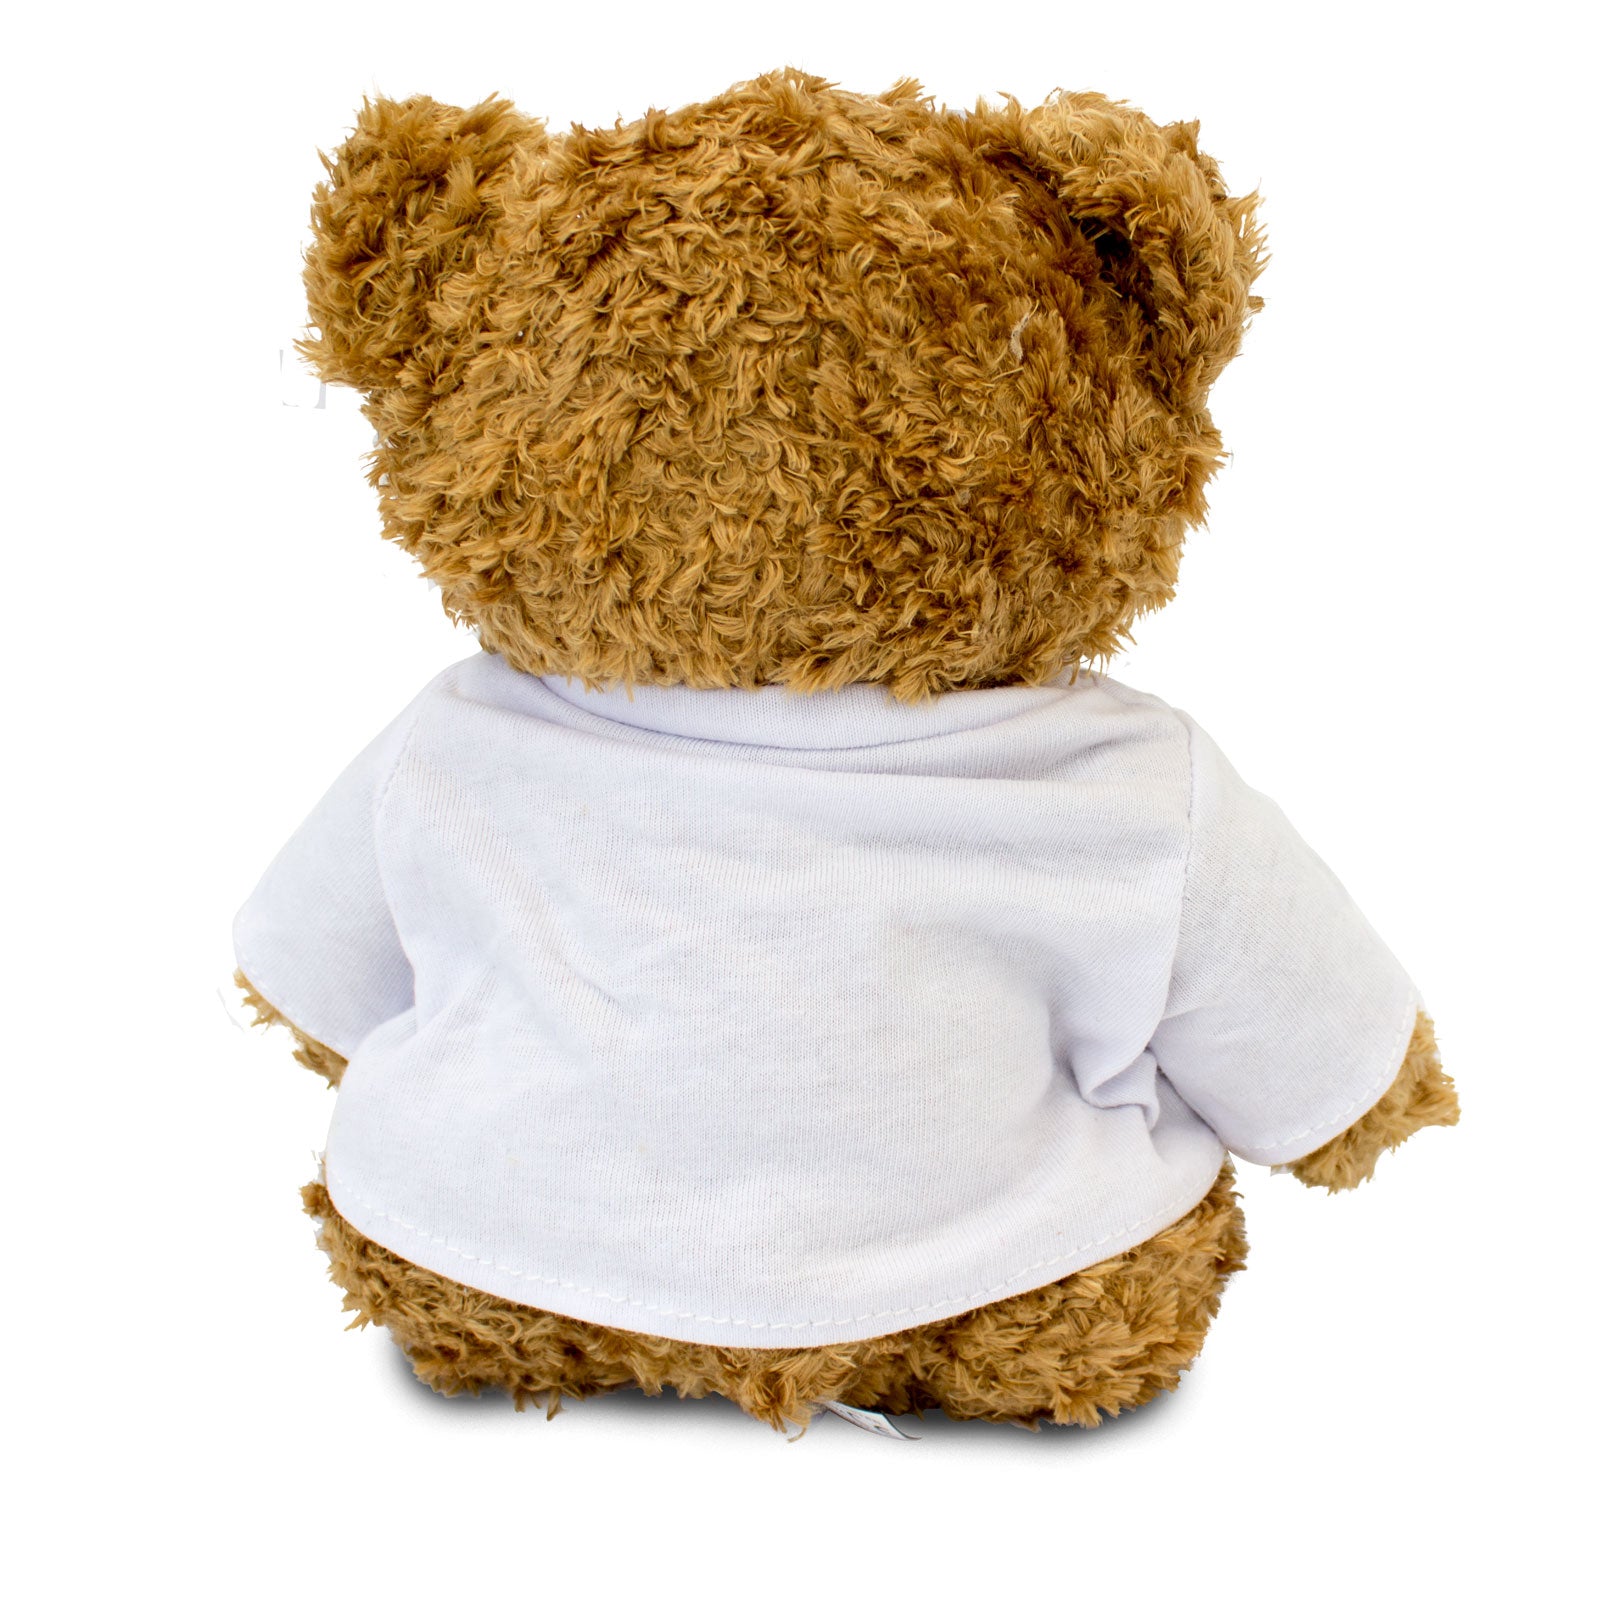 Get Well Soon Carren - Teddy Bear